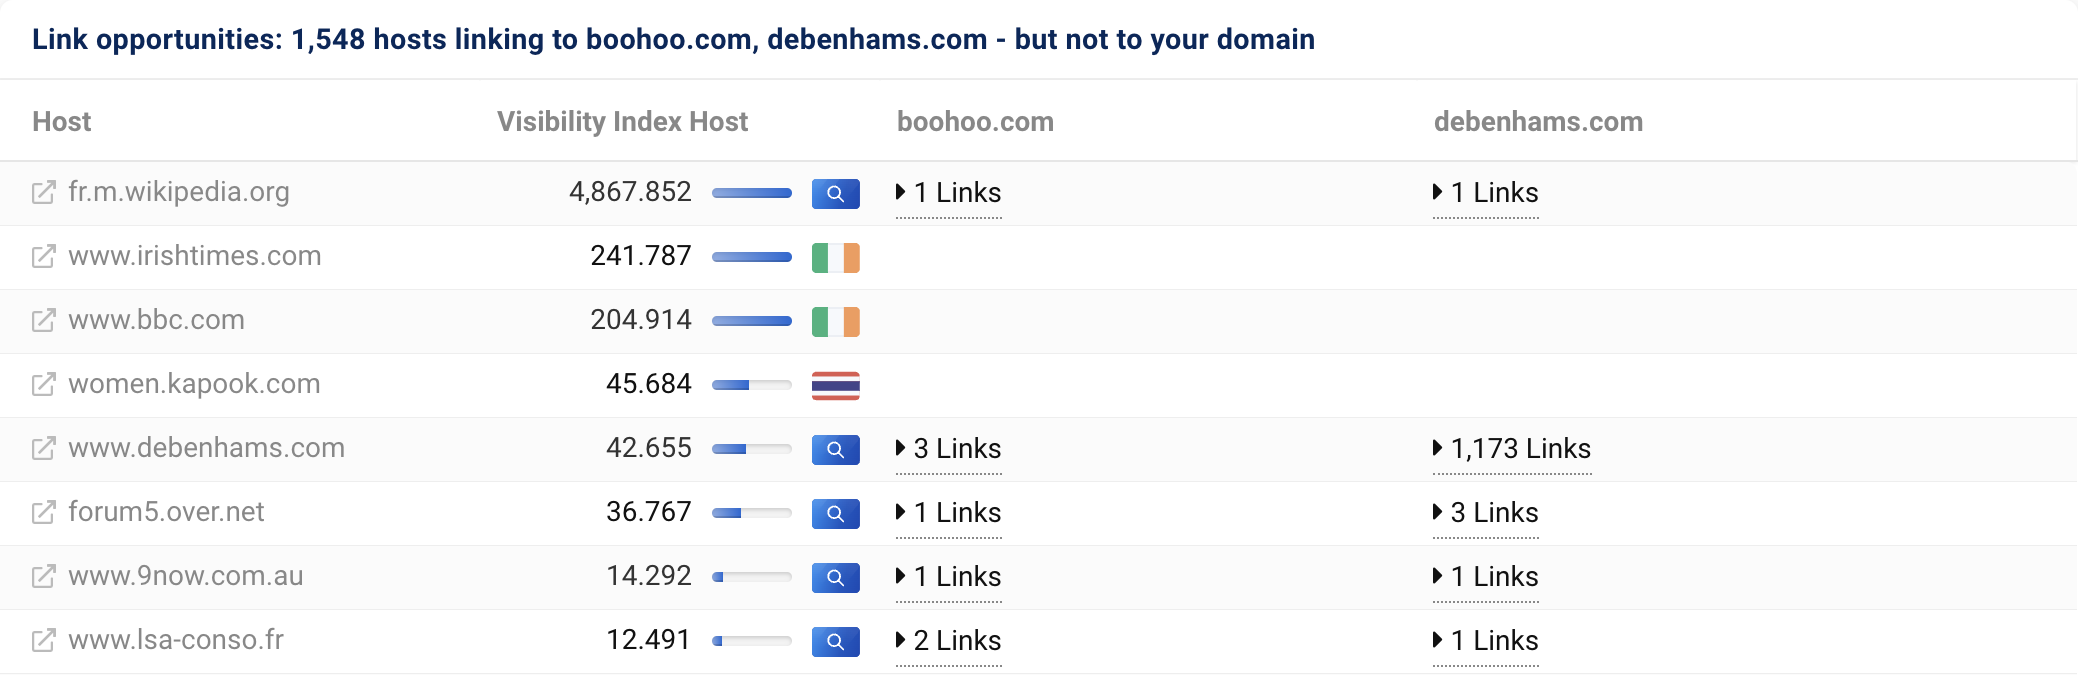 1.548 host si collegano a boohoo.com e debenhams.com, ma non al nostro dominio asos.com.